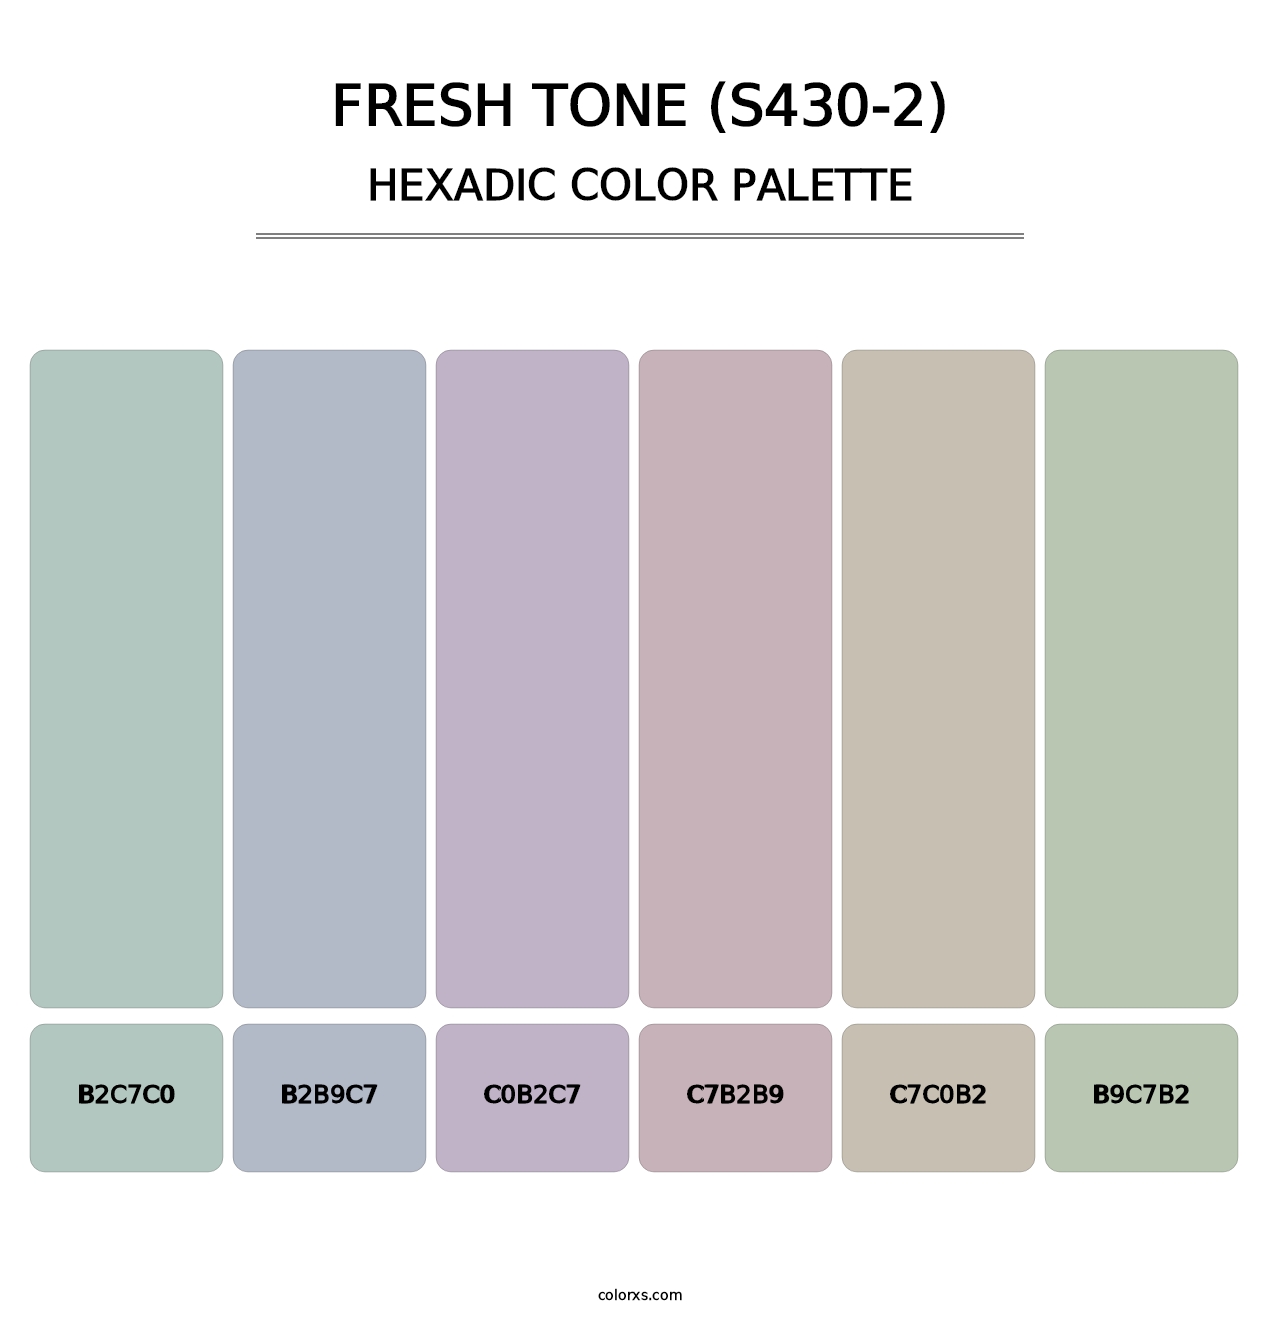 Fresh Tone (S430-2) - Hexadic Color Palette